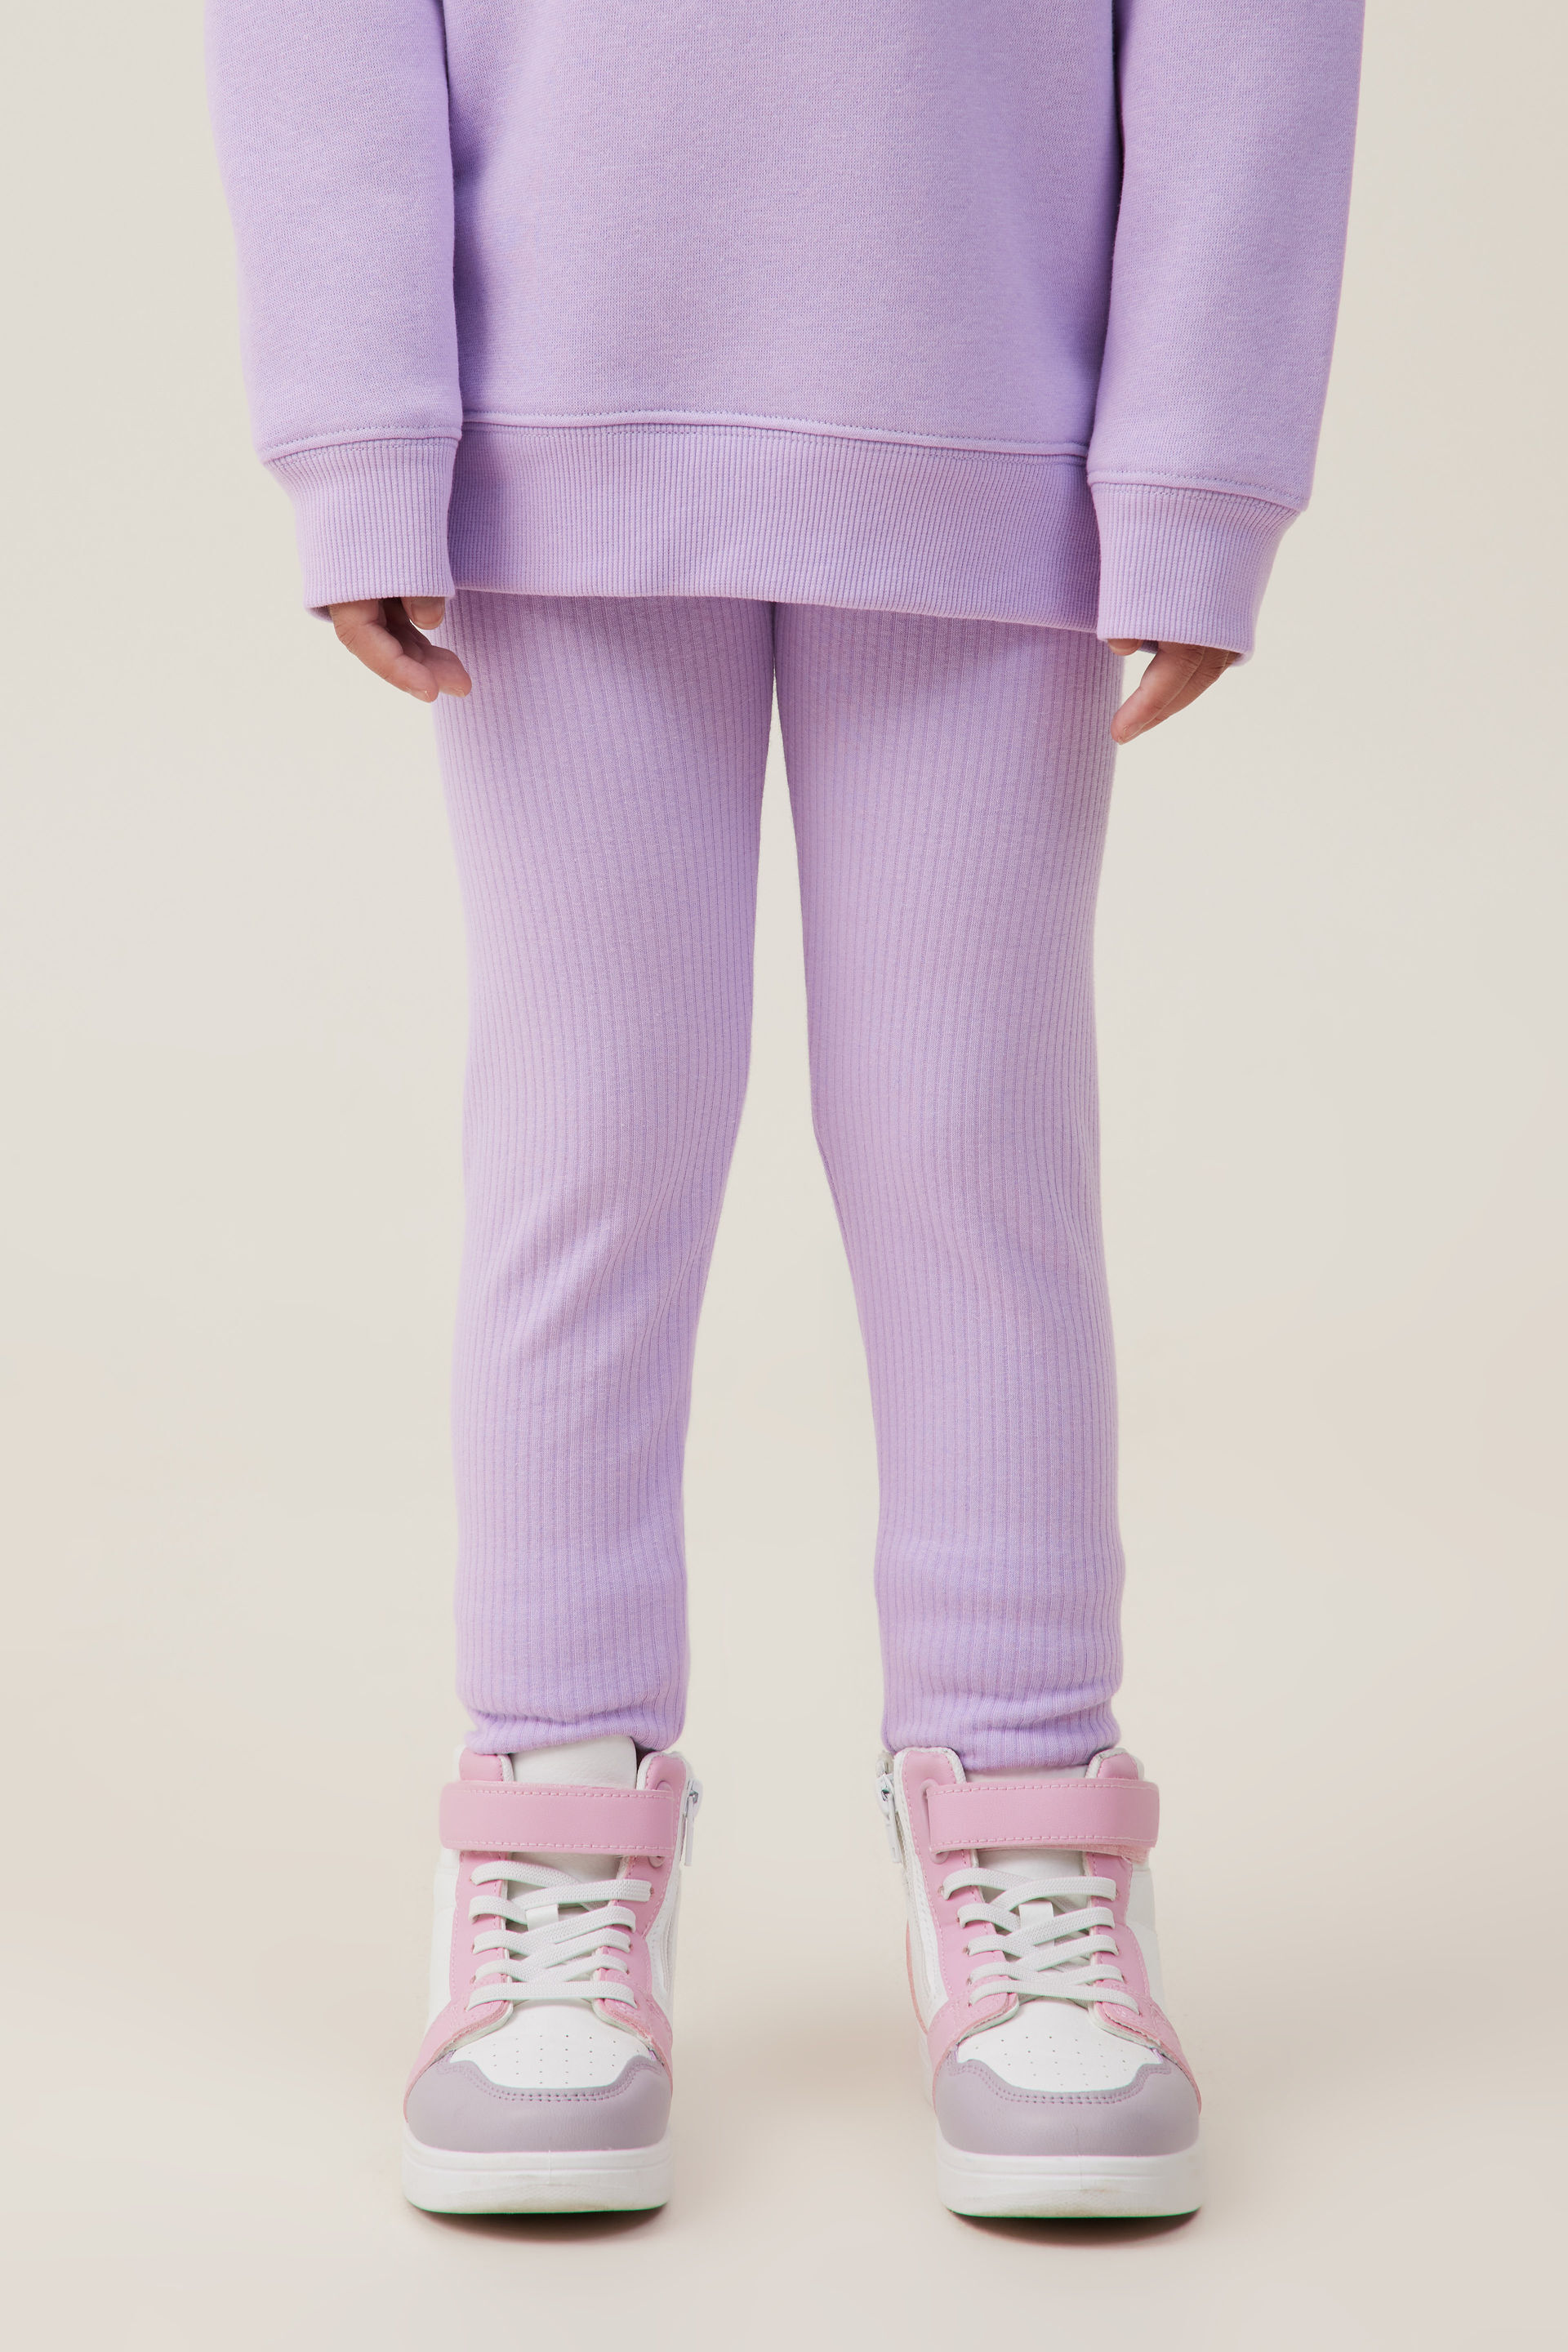 Amazon.com: Aslsiy Girls Leggings Cute Purple Daisy Toddler Stretch Tights  Pants Full Length Dance Yoga Pants 4T: Clothing, Shoes & Jewelry